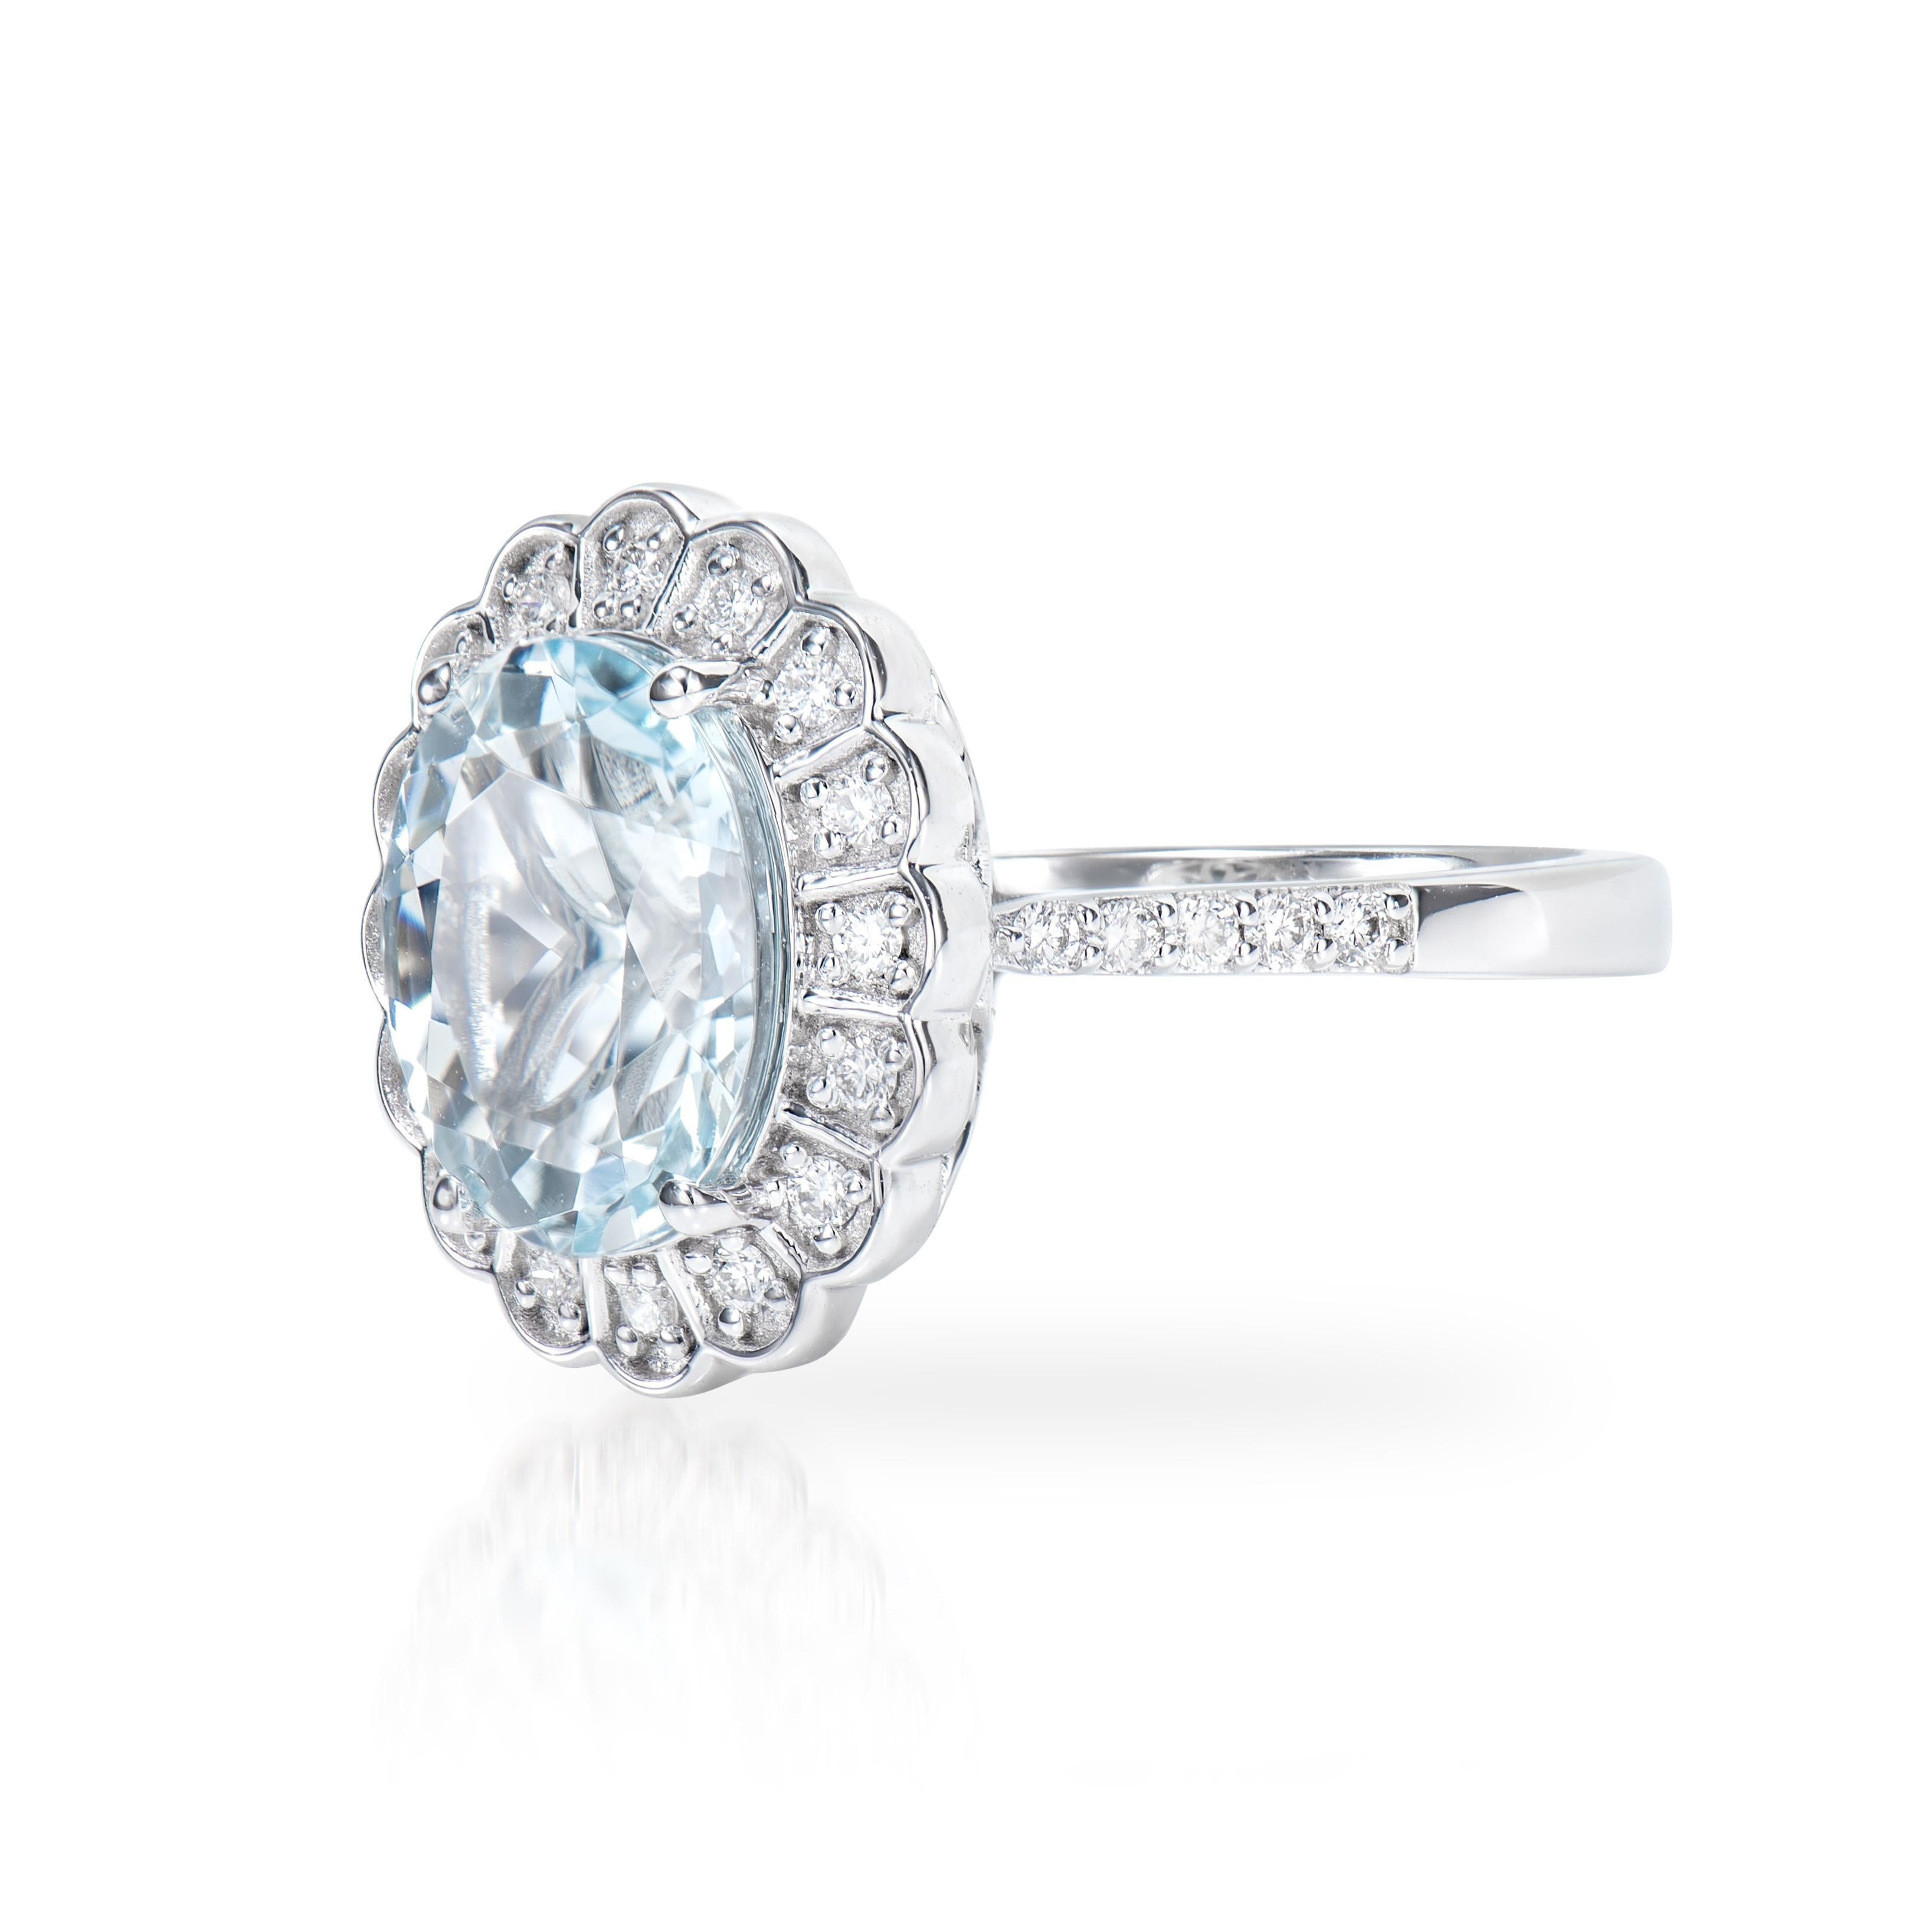 Oval Cut 3.08 Carat Aquamarine Elegant Ring in 18 Karat White Gold with White Diamond For Sale